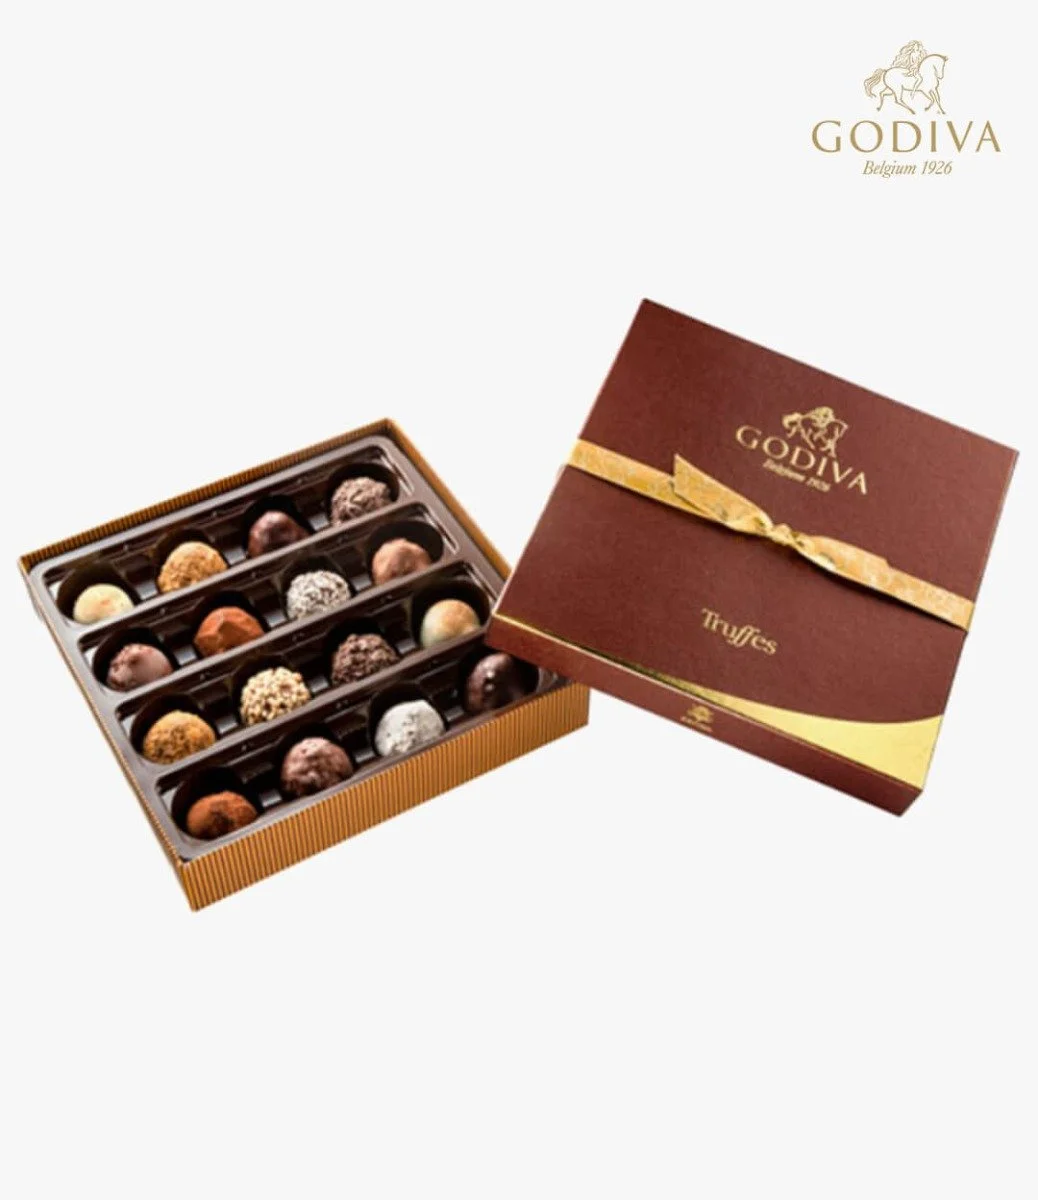 Godiva Signature Truffle Box